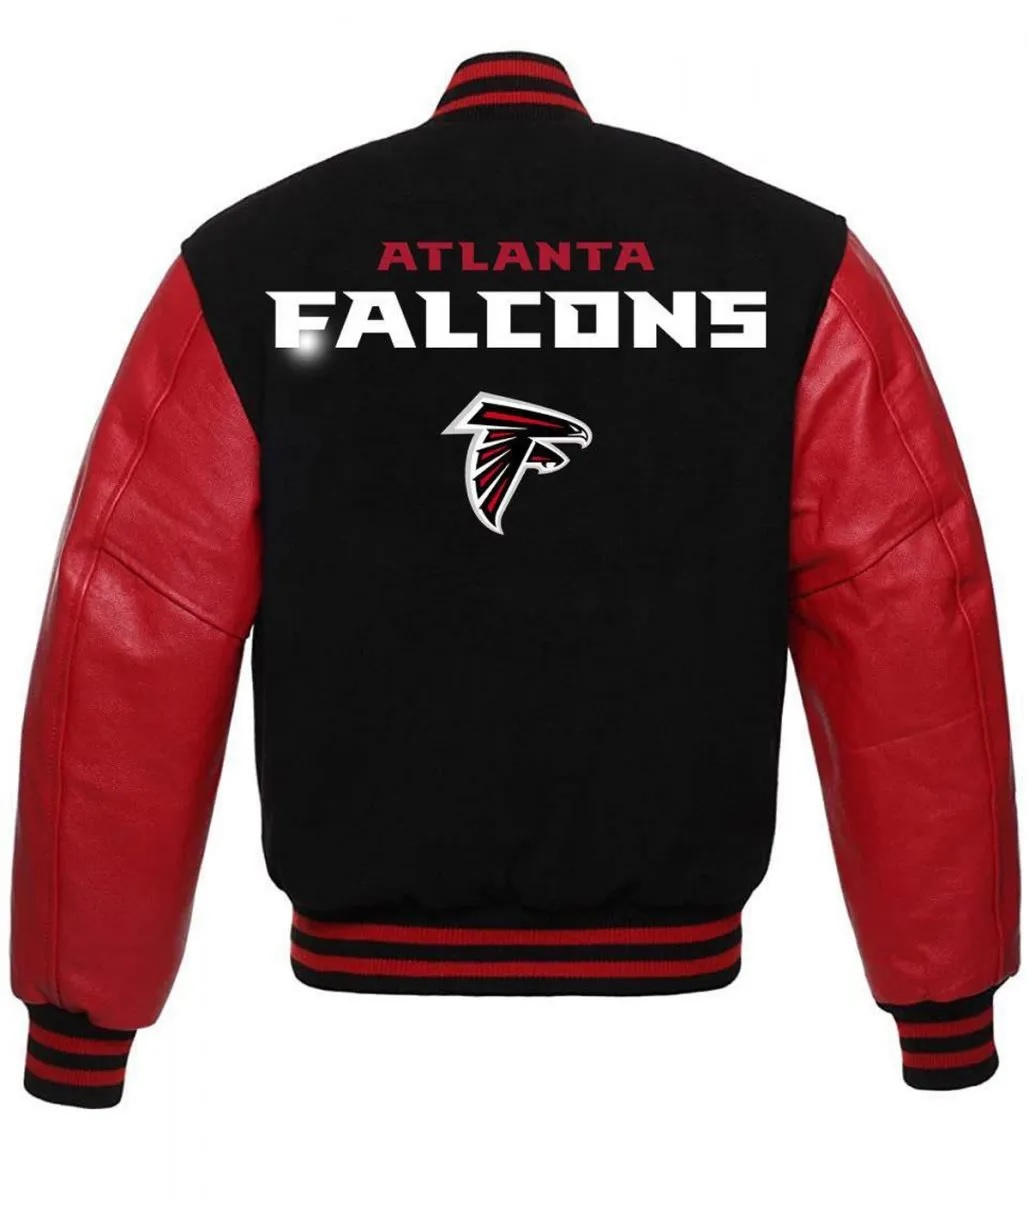 Atlanta Falcons Red and Black Letterman Jacket